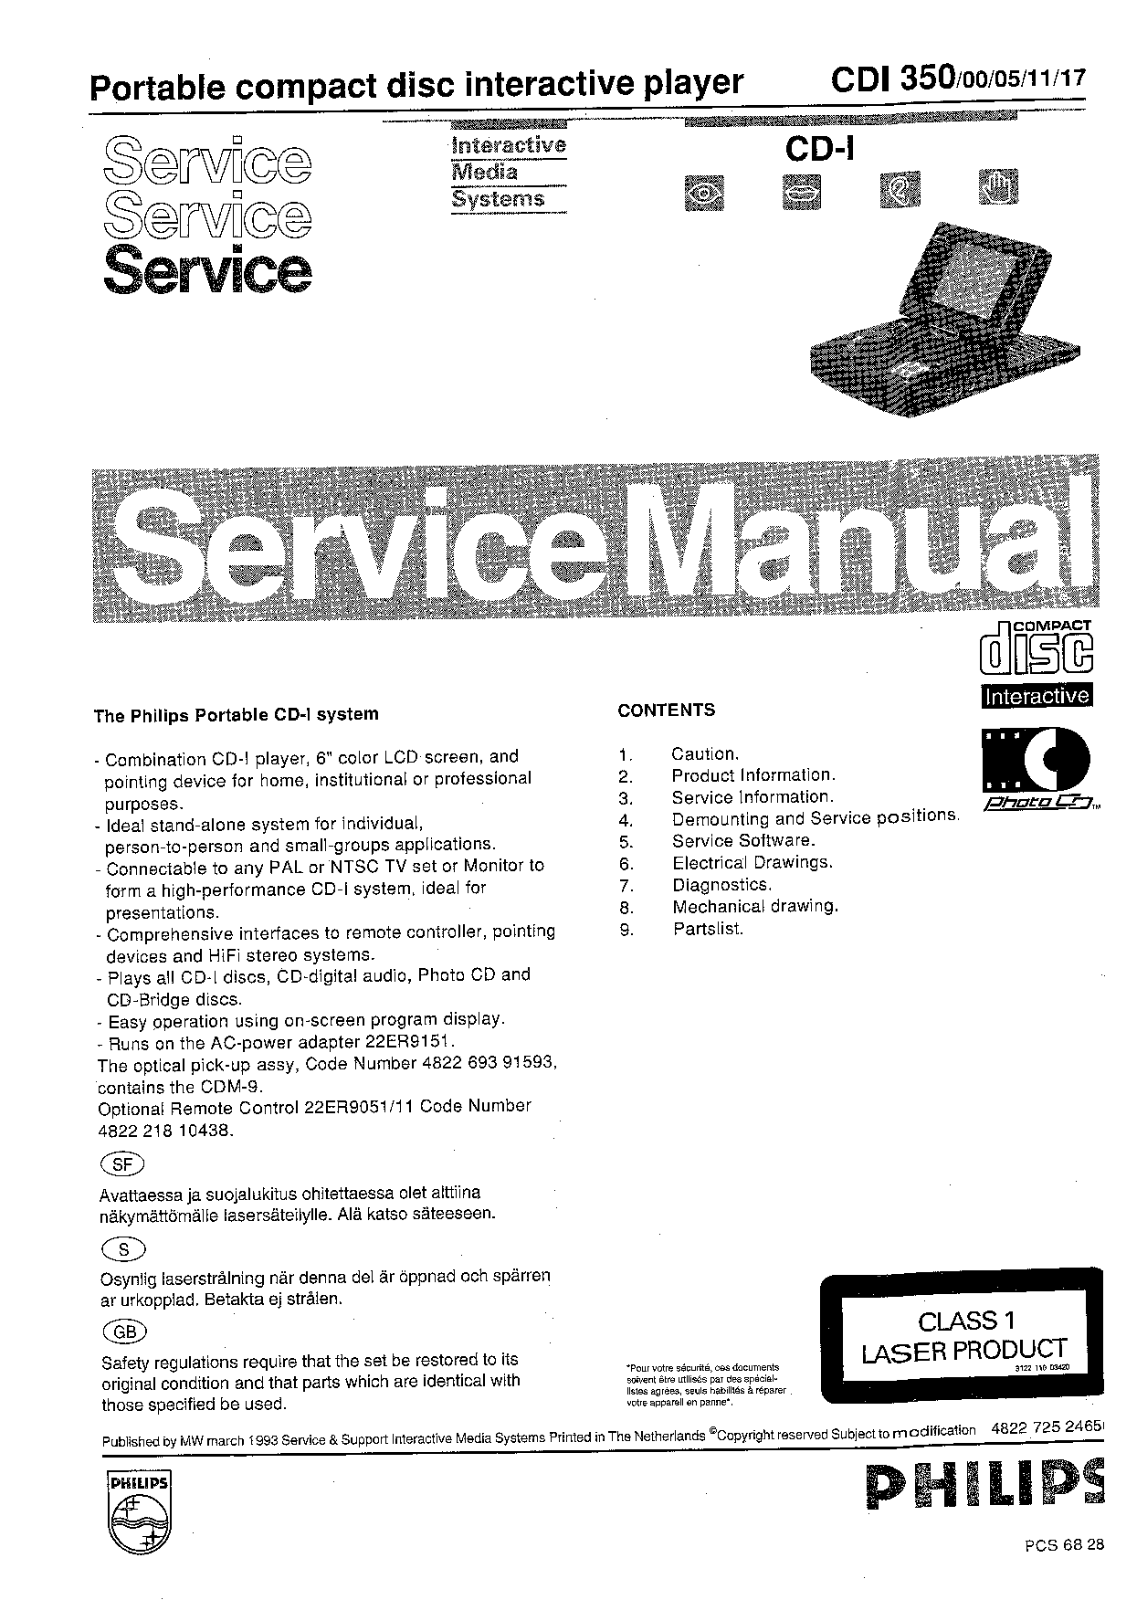 Philips CDI-350 Service manual